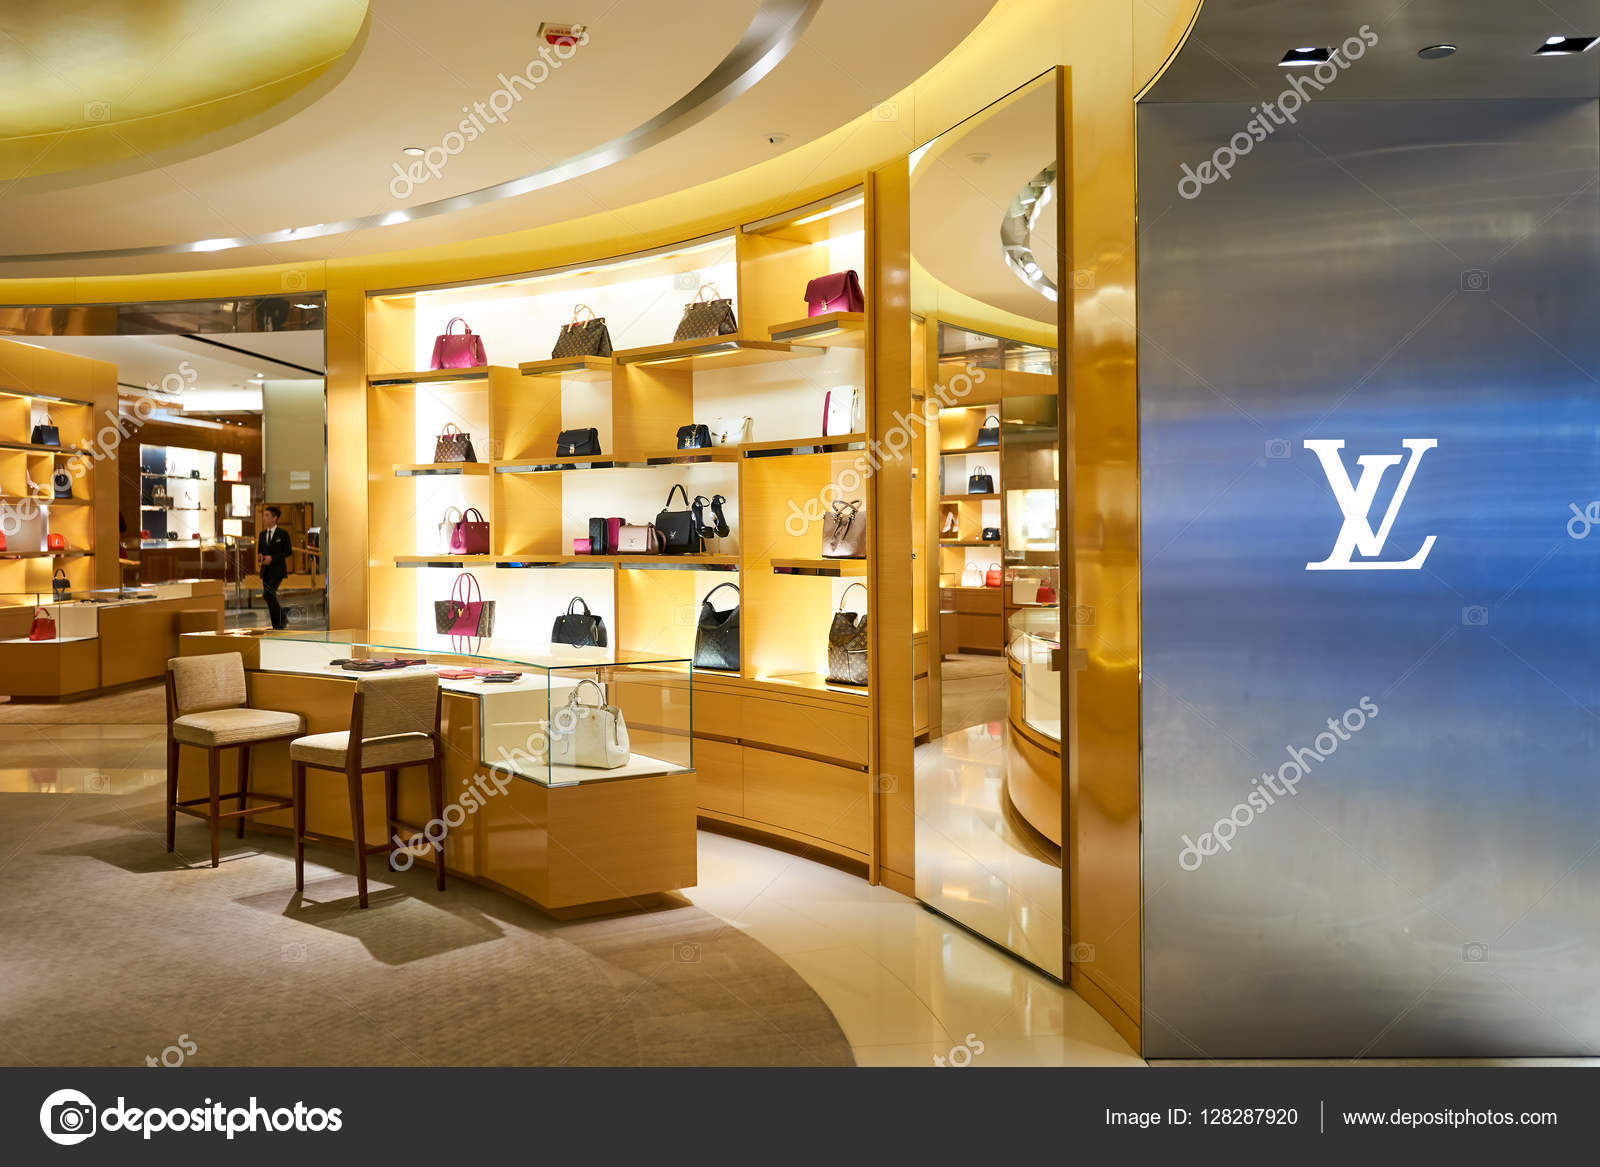 How To Check Louis Vuitton Stock